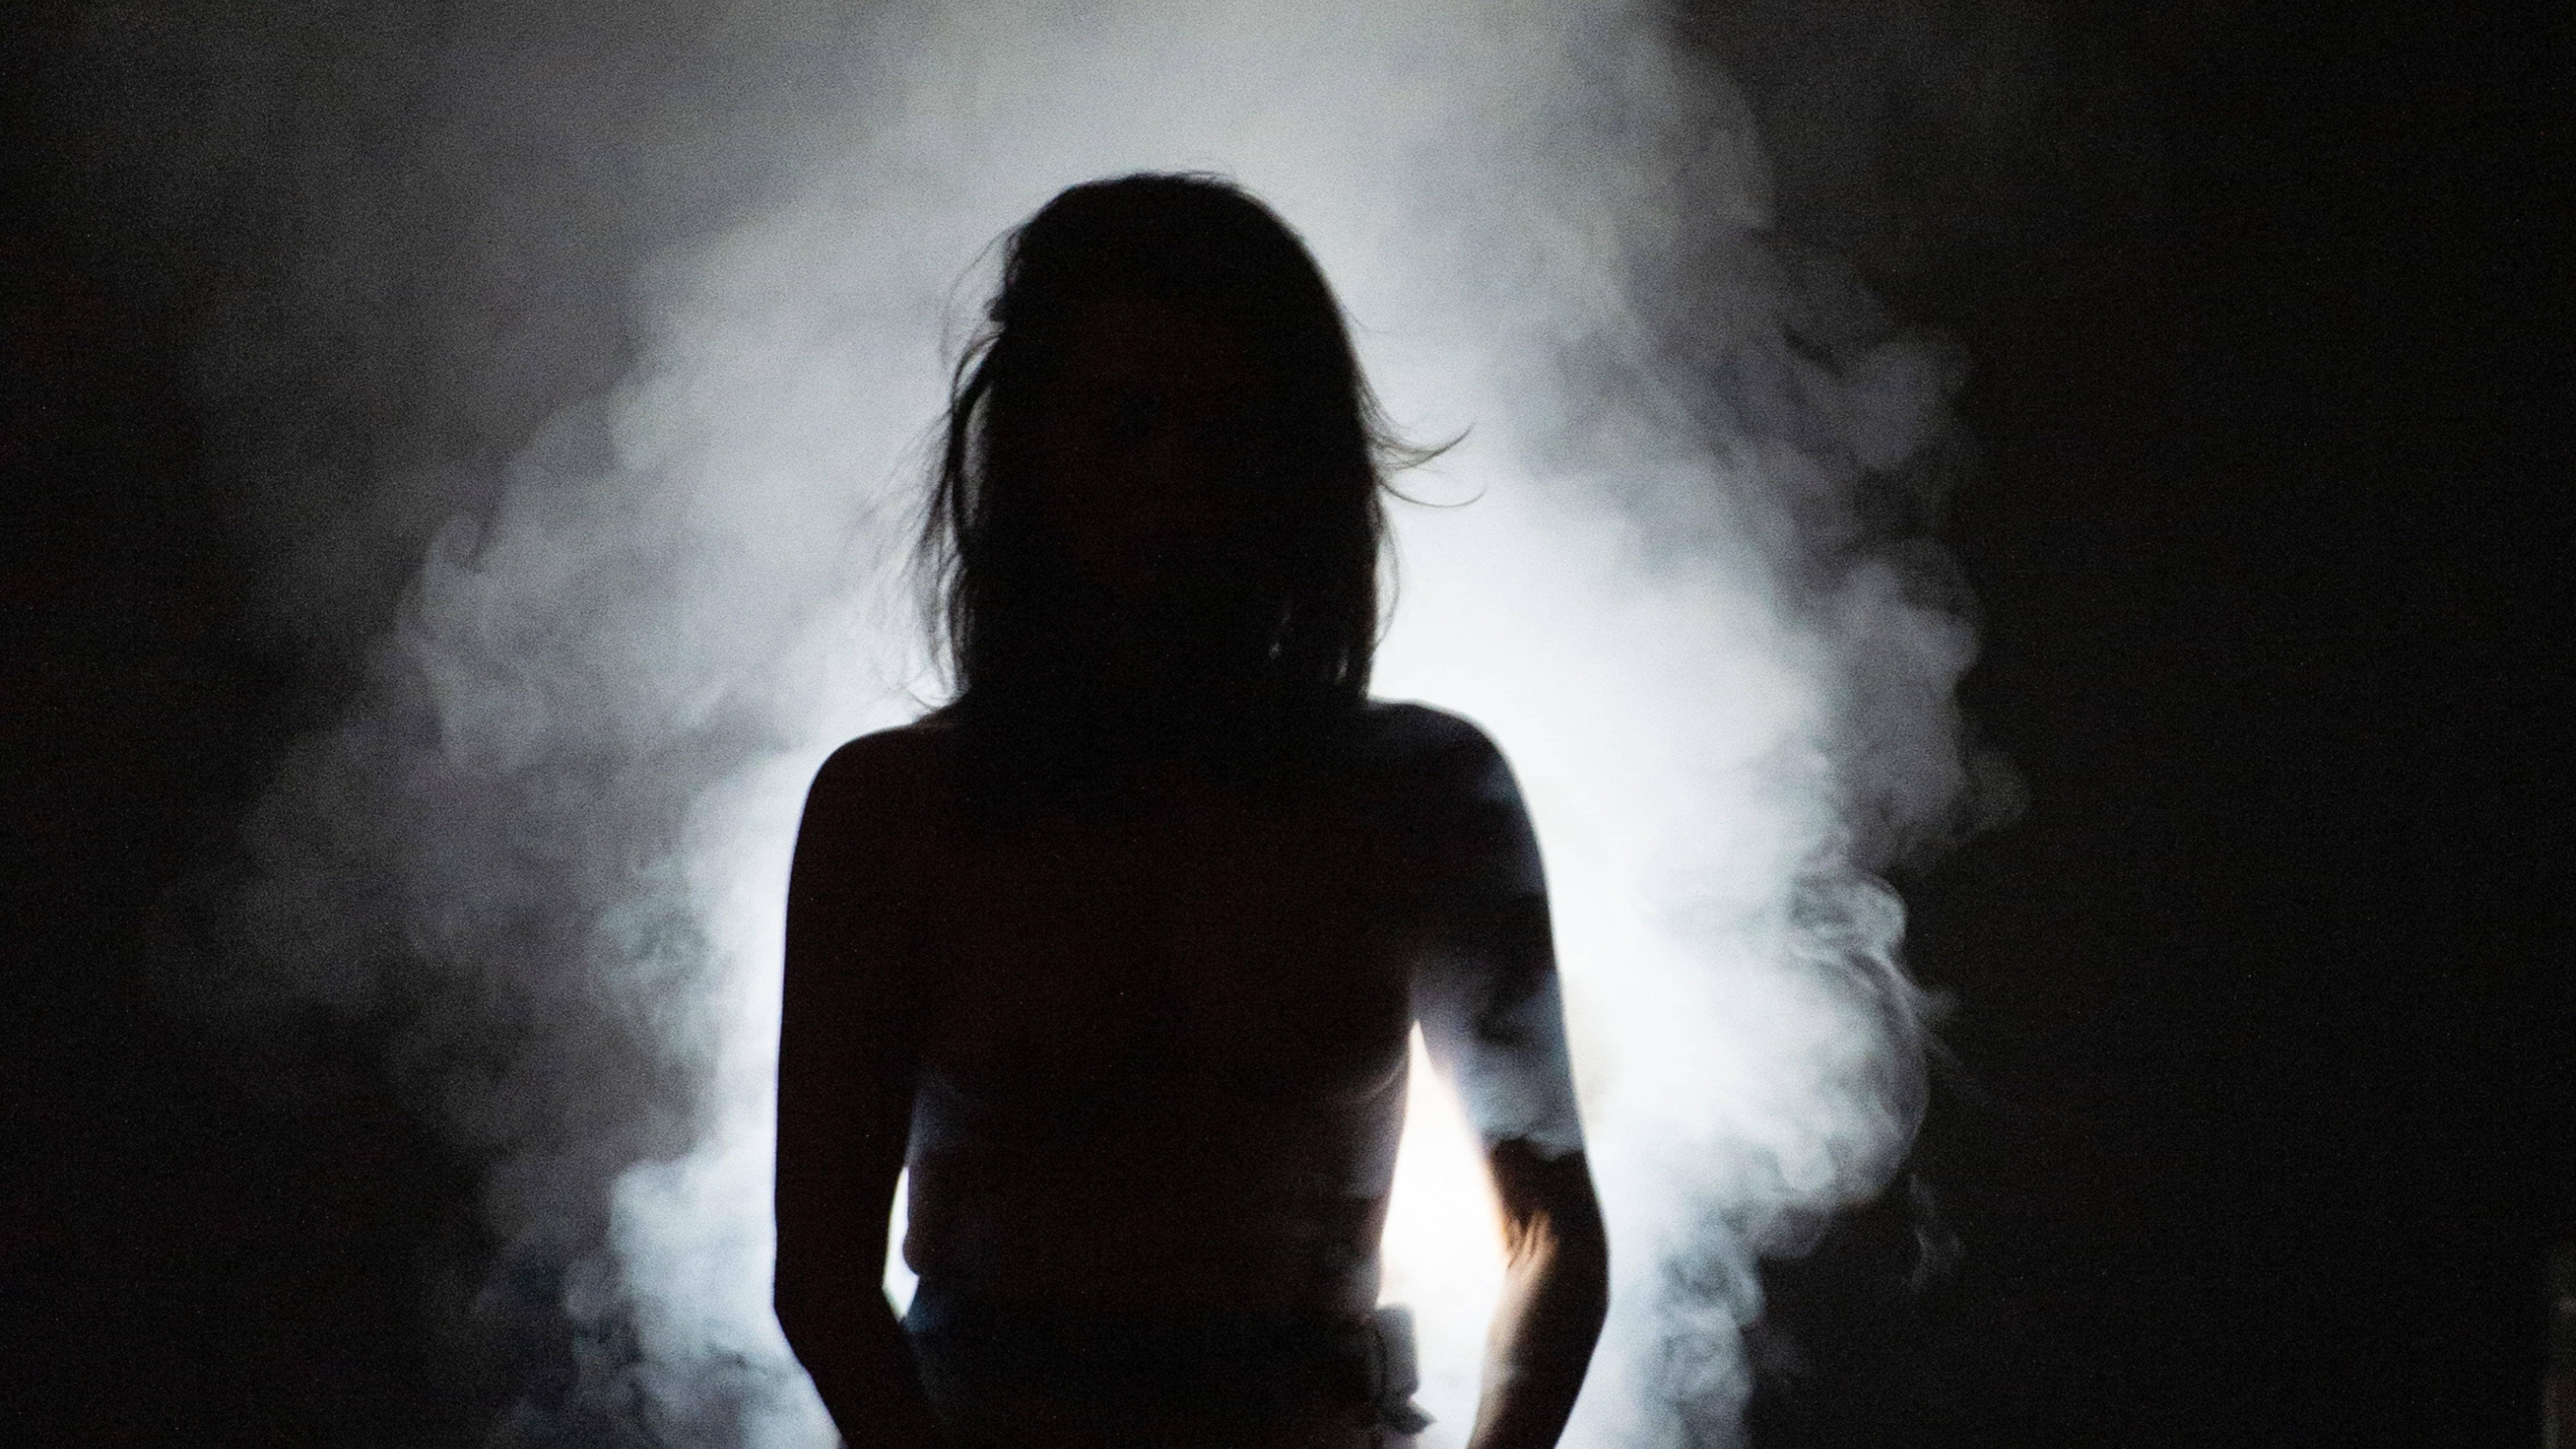 Emmanuelle Huynh作品《Nuée》中的舞台烟云